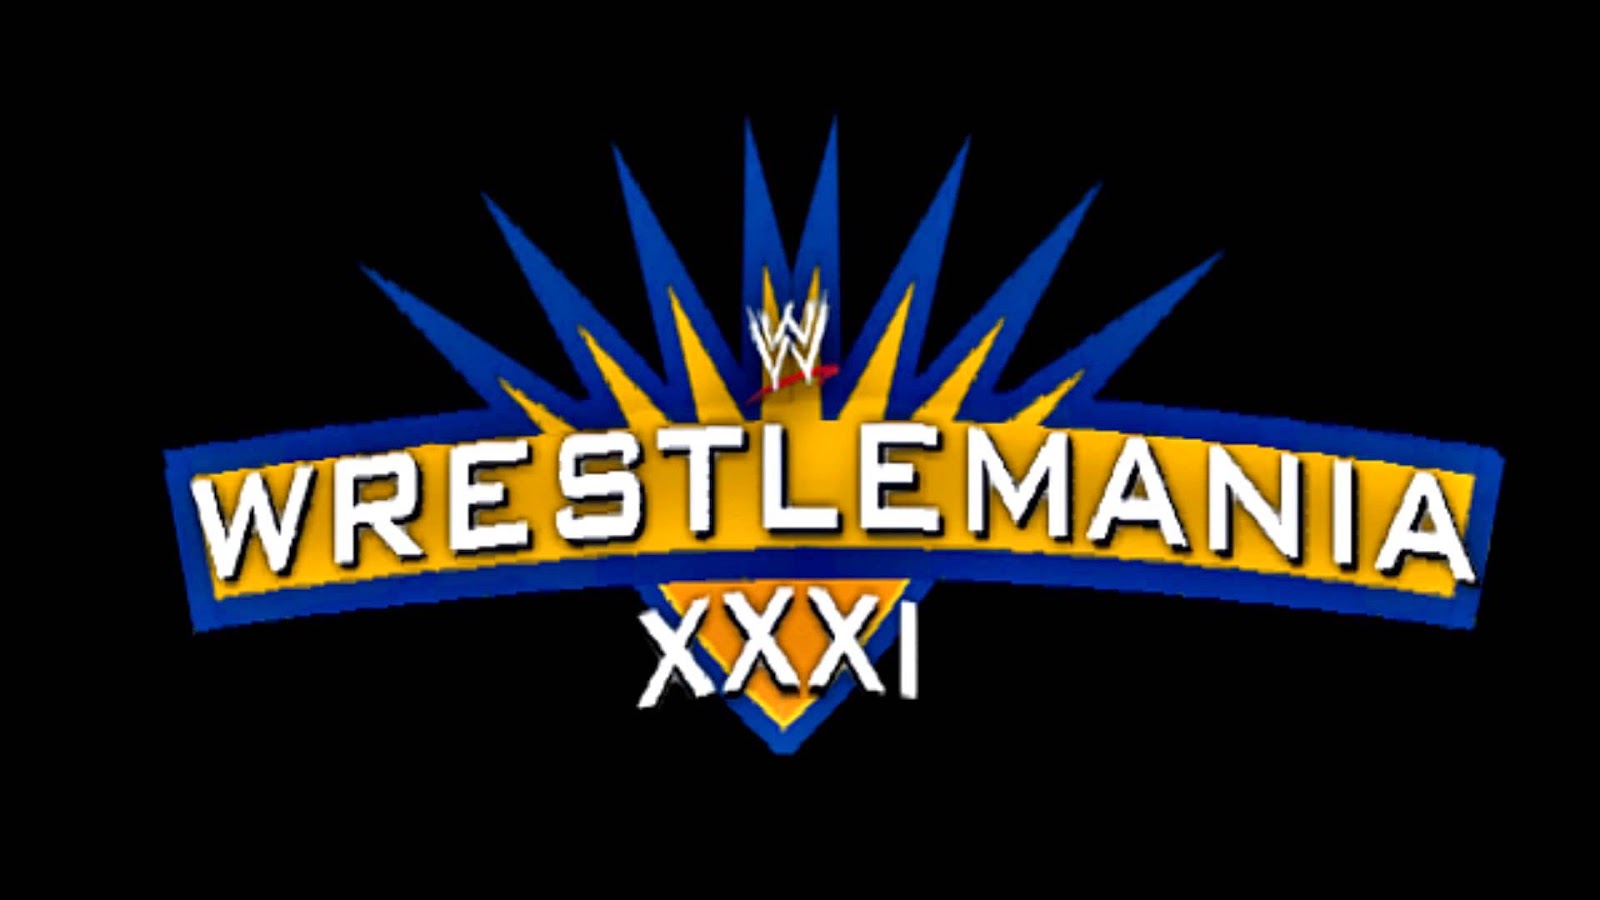 Wwe Wrestlemania Logo Wallpaper Image